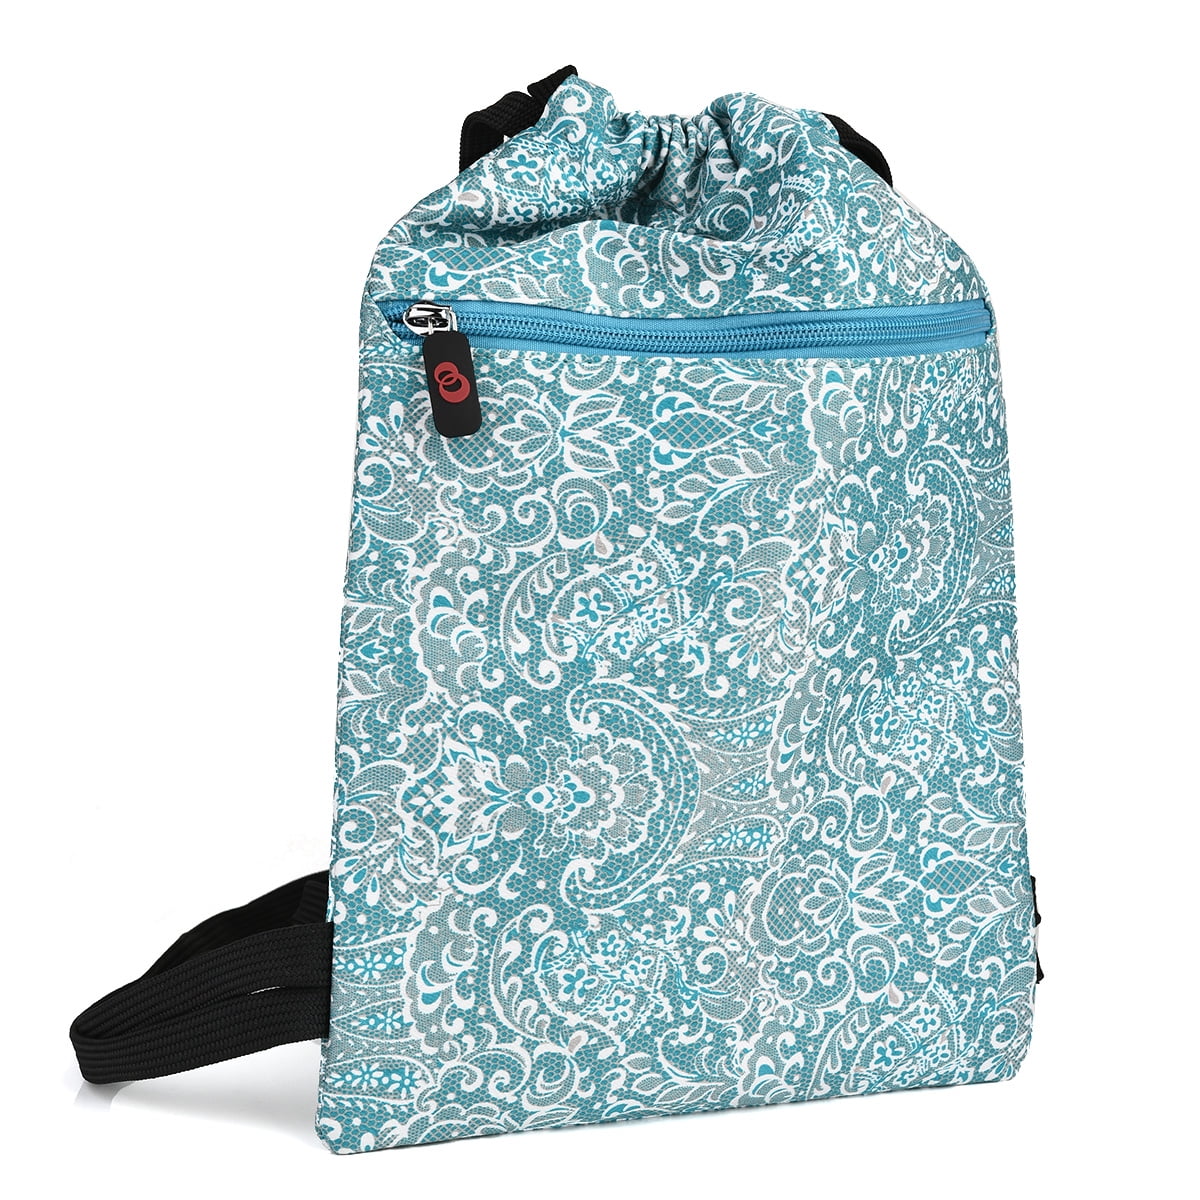 Bag Mesh Bag Drawstring Storage Bag For Tavel Hiking Backpack Beach Bag 